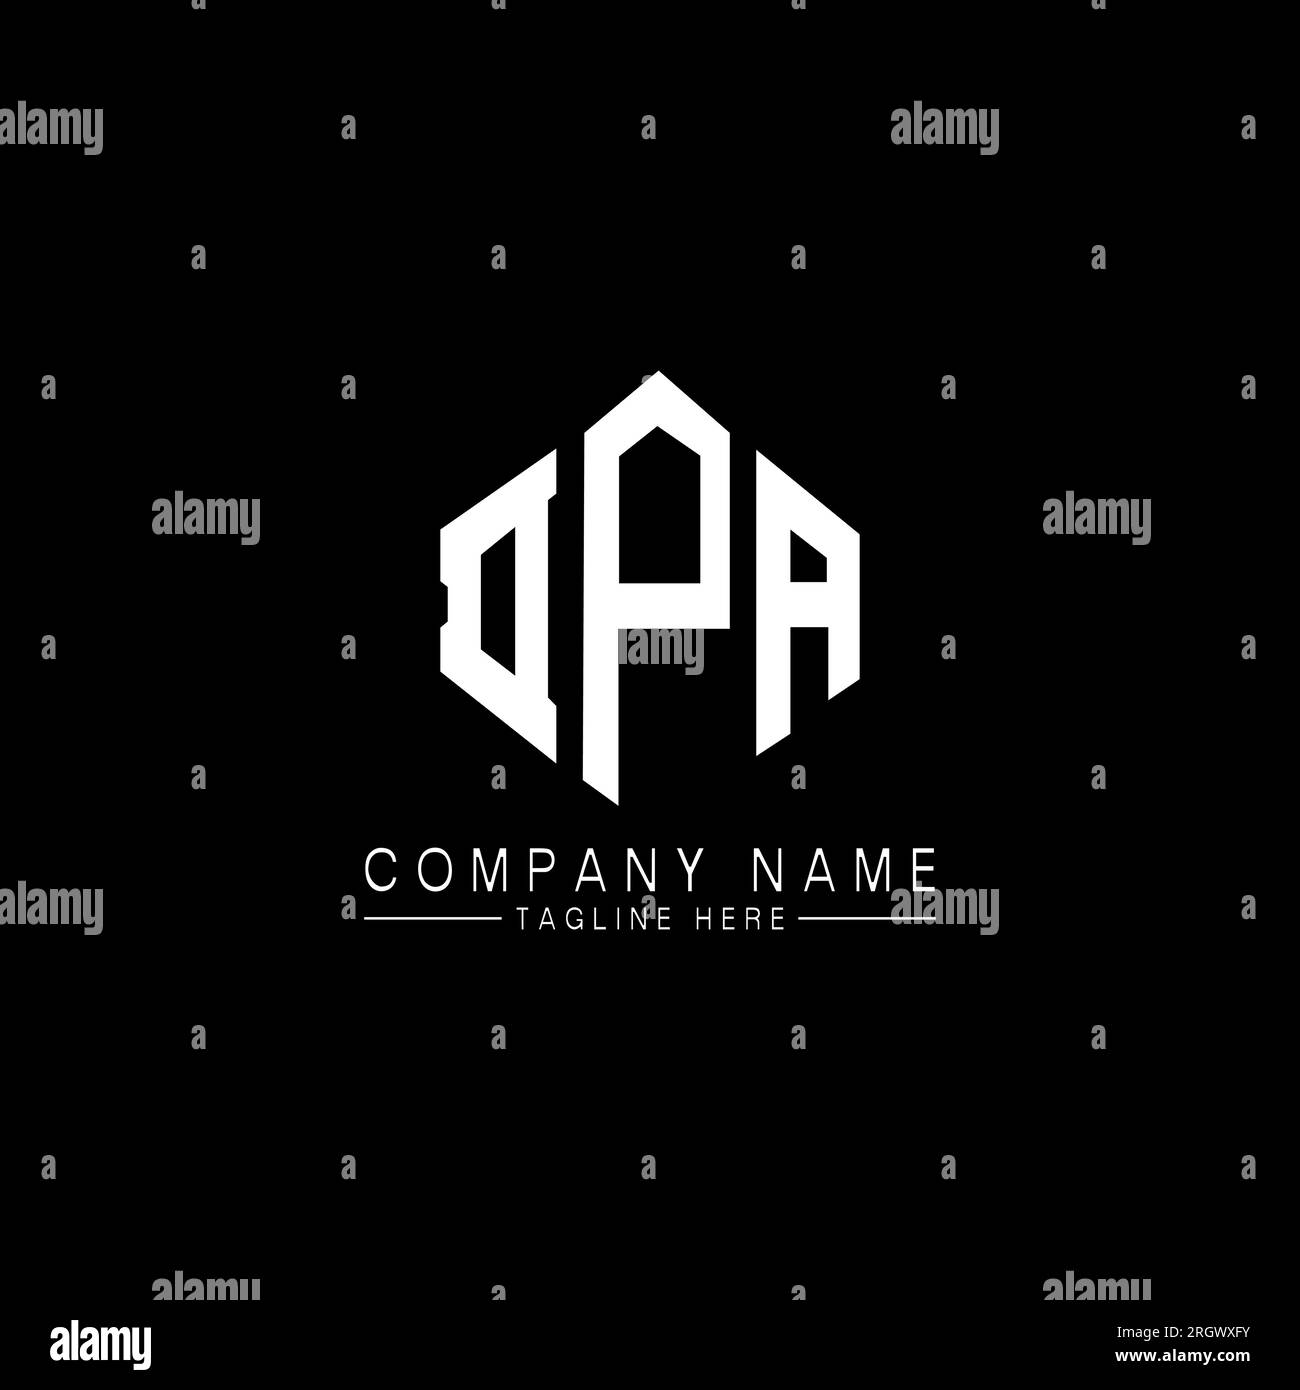 DPA-Logo in Polygonform. DPA-Polygon- und würfelförmiges Logo. Sechseckige DPA-Vektor-Logo-Vorlage in Weiß und Schwarz. DPA Monogr Stock Vektor